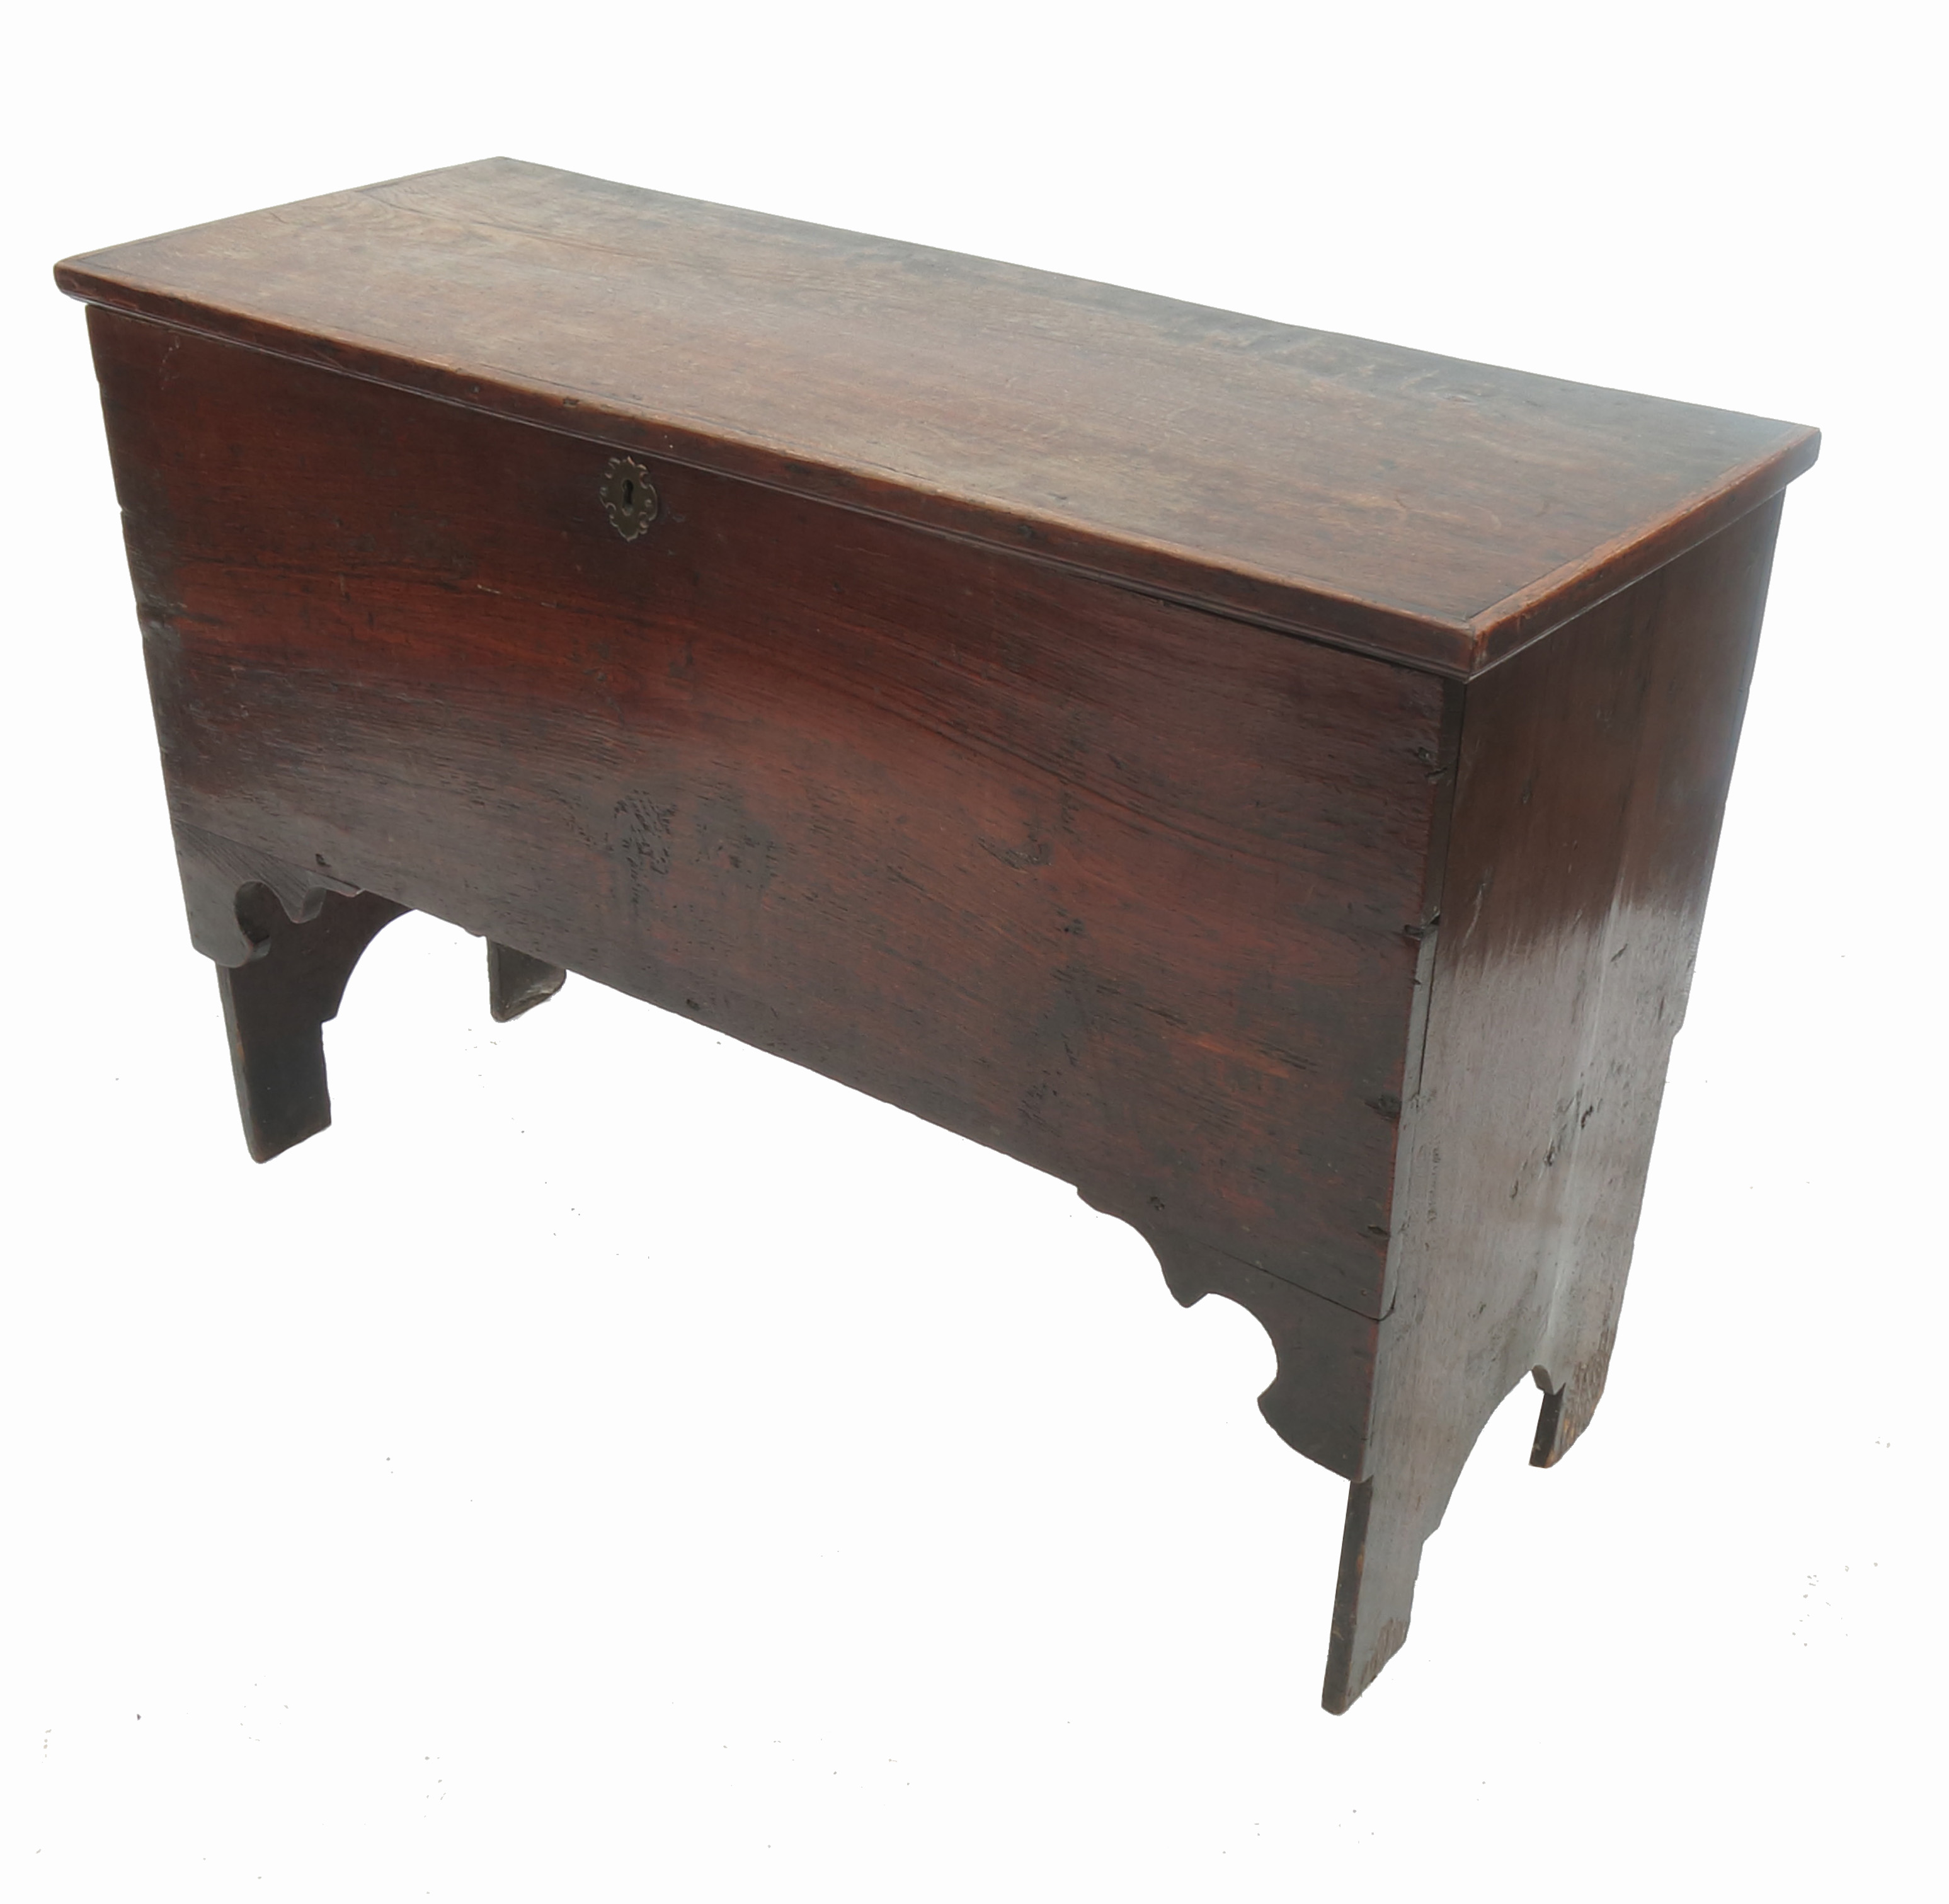 An antique oak six plank coffer or sword box, with plain rising lid, width 38.